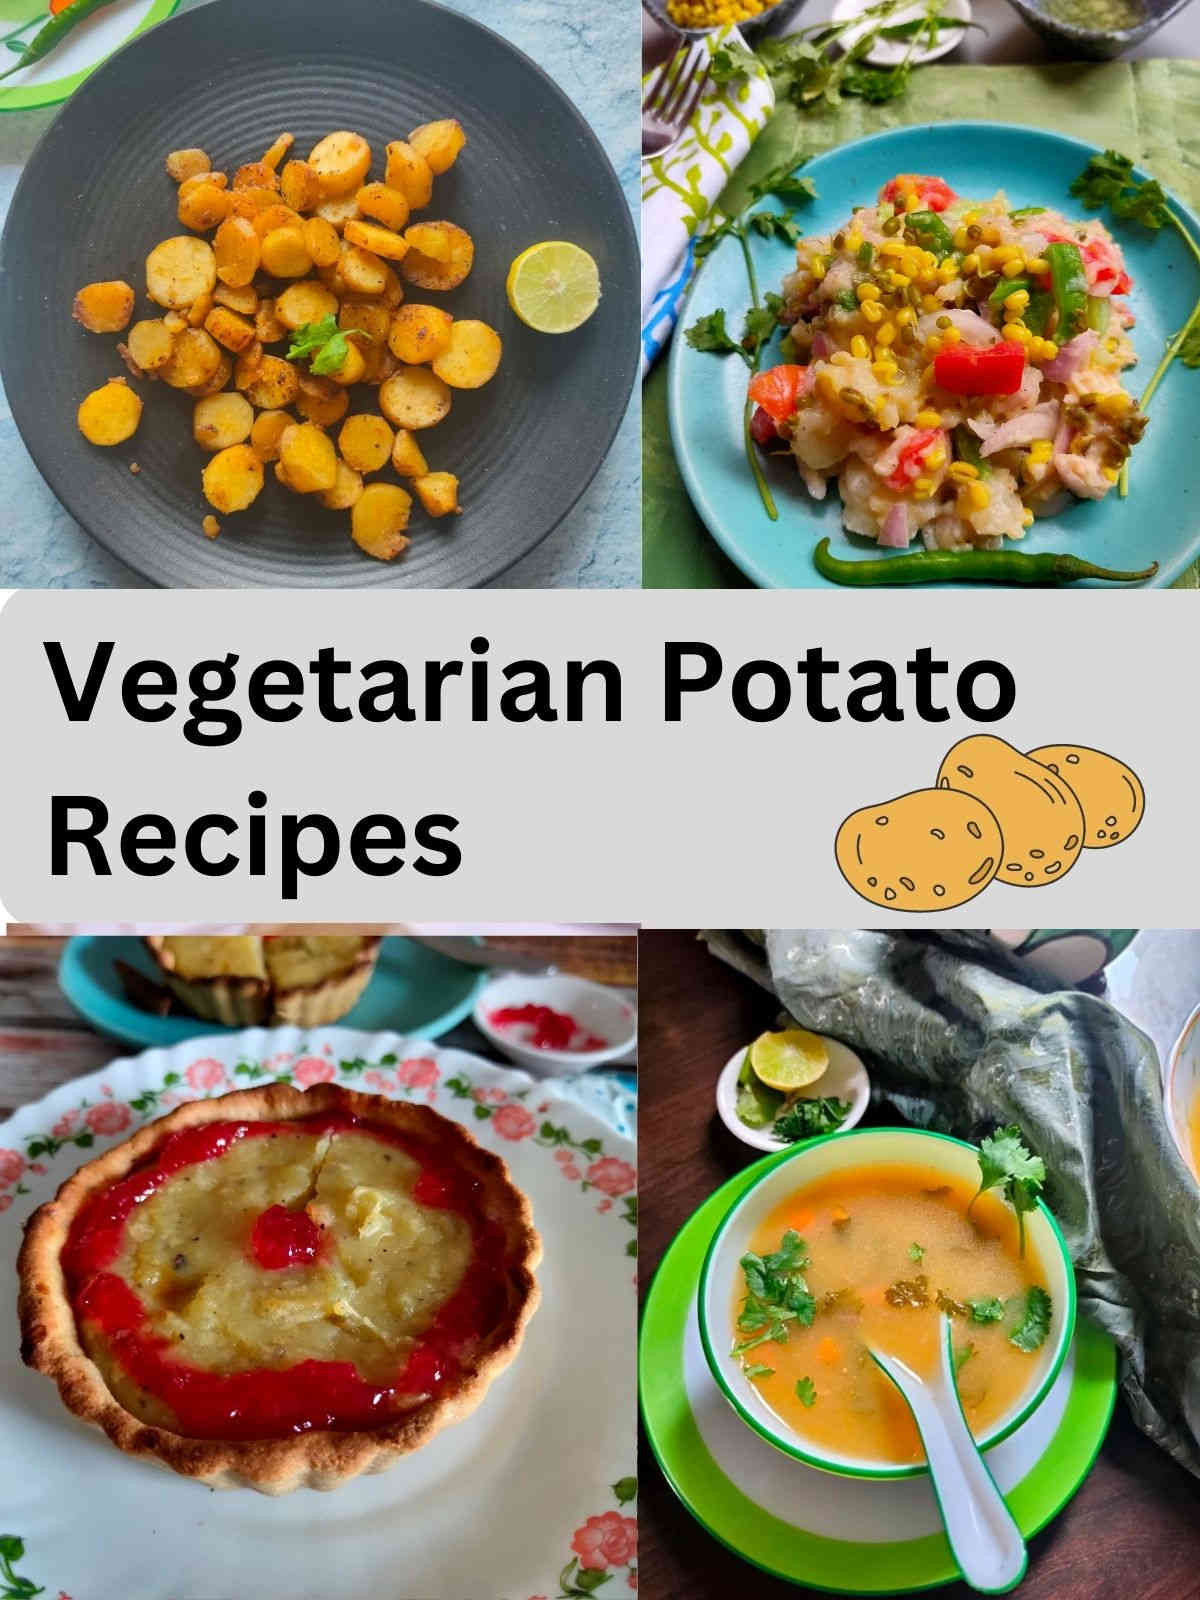 vegetarian potato recipes indian and world